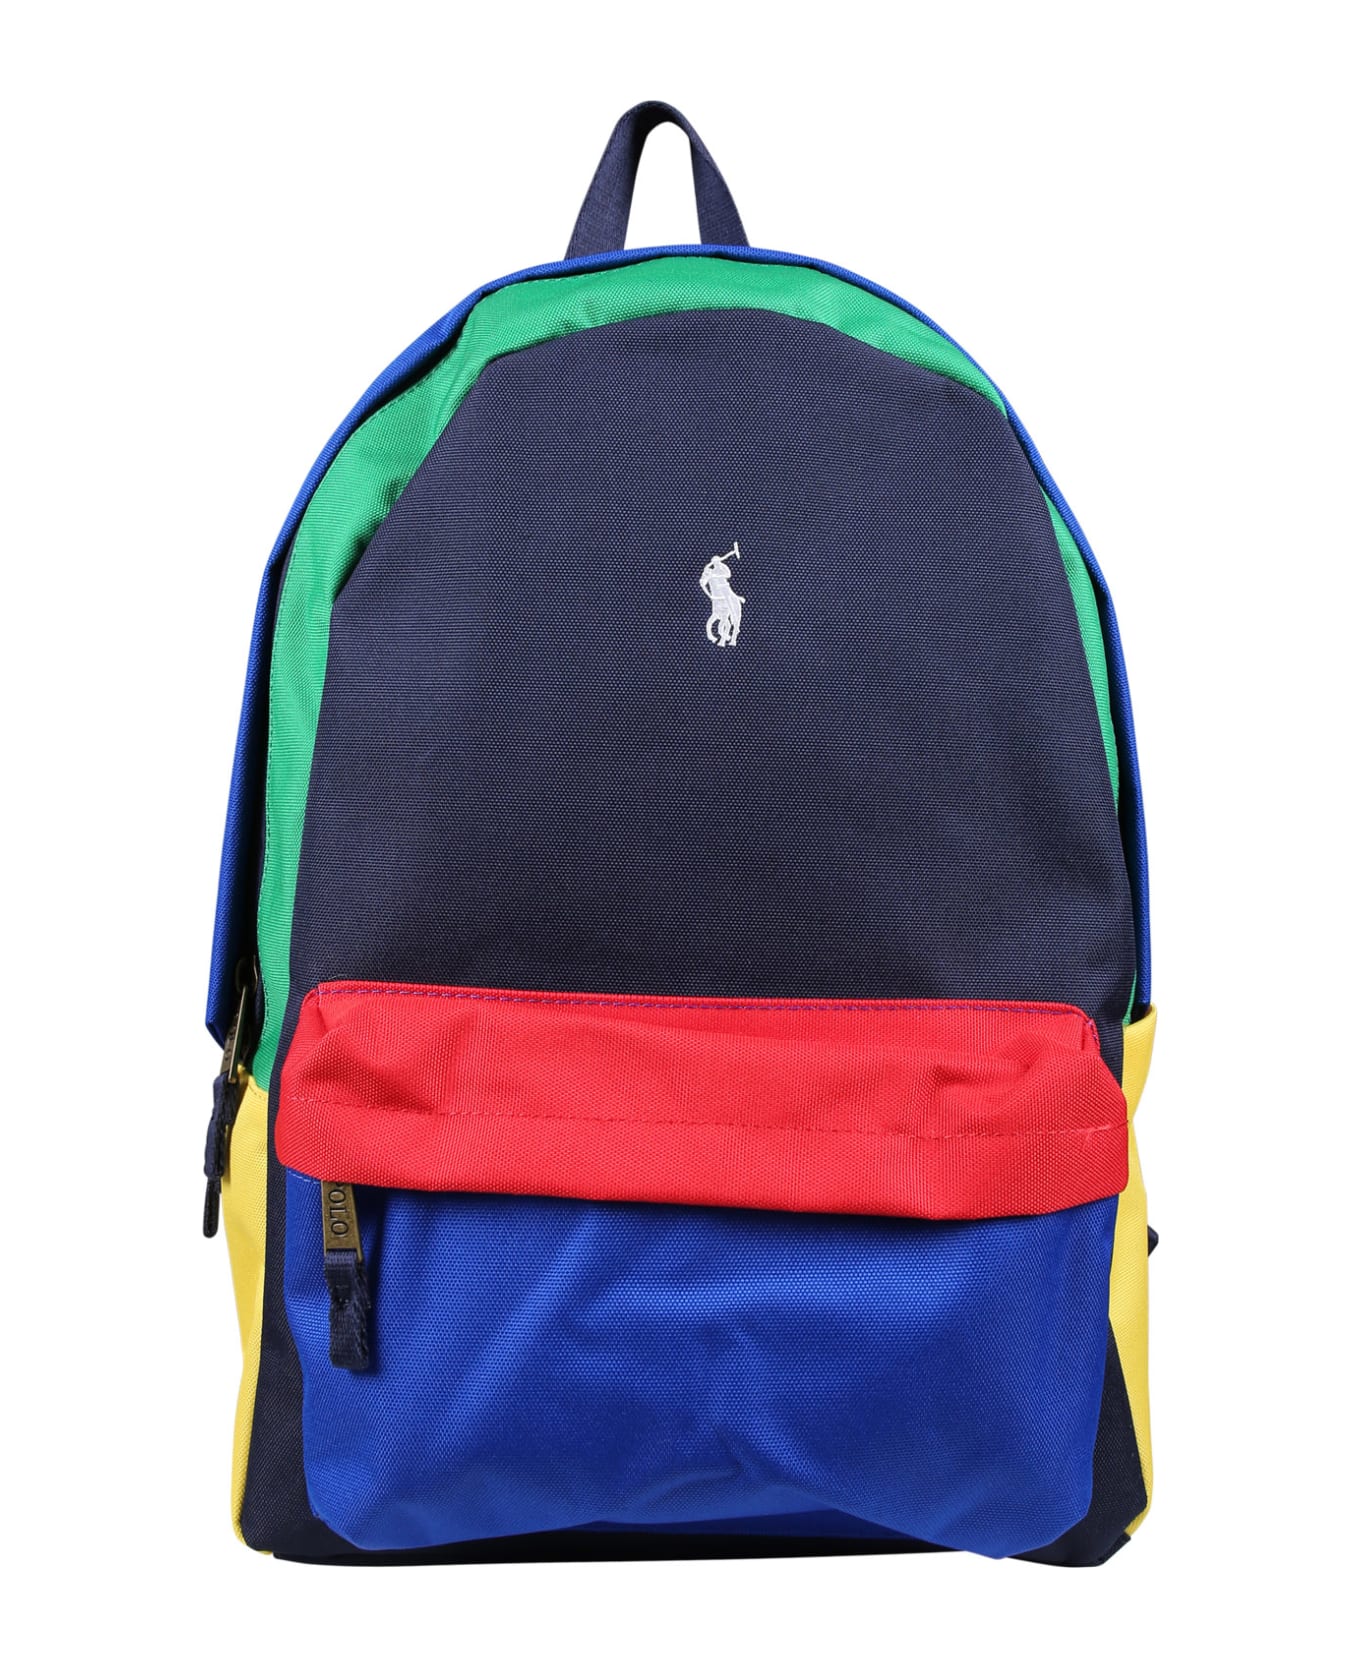 Ralph Lauren Multicolor Backpack For Kids - Multicolor